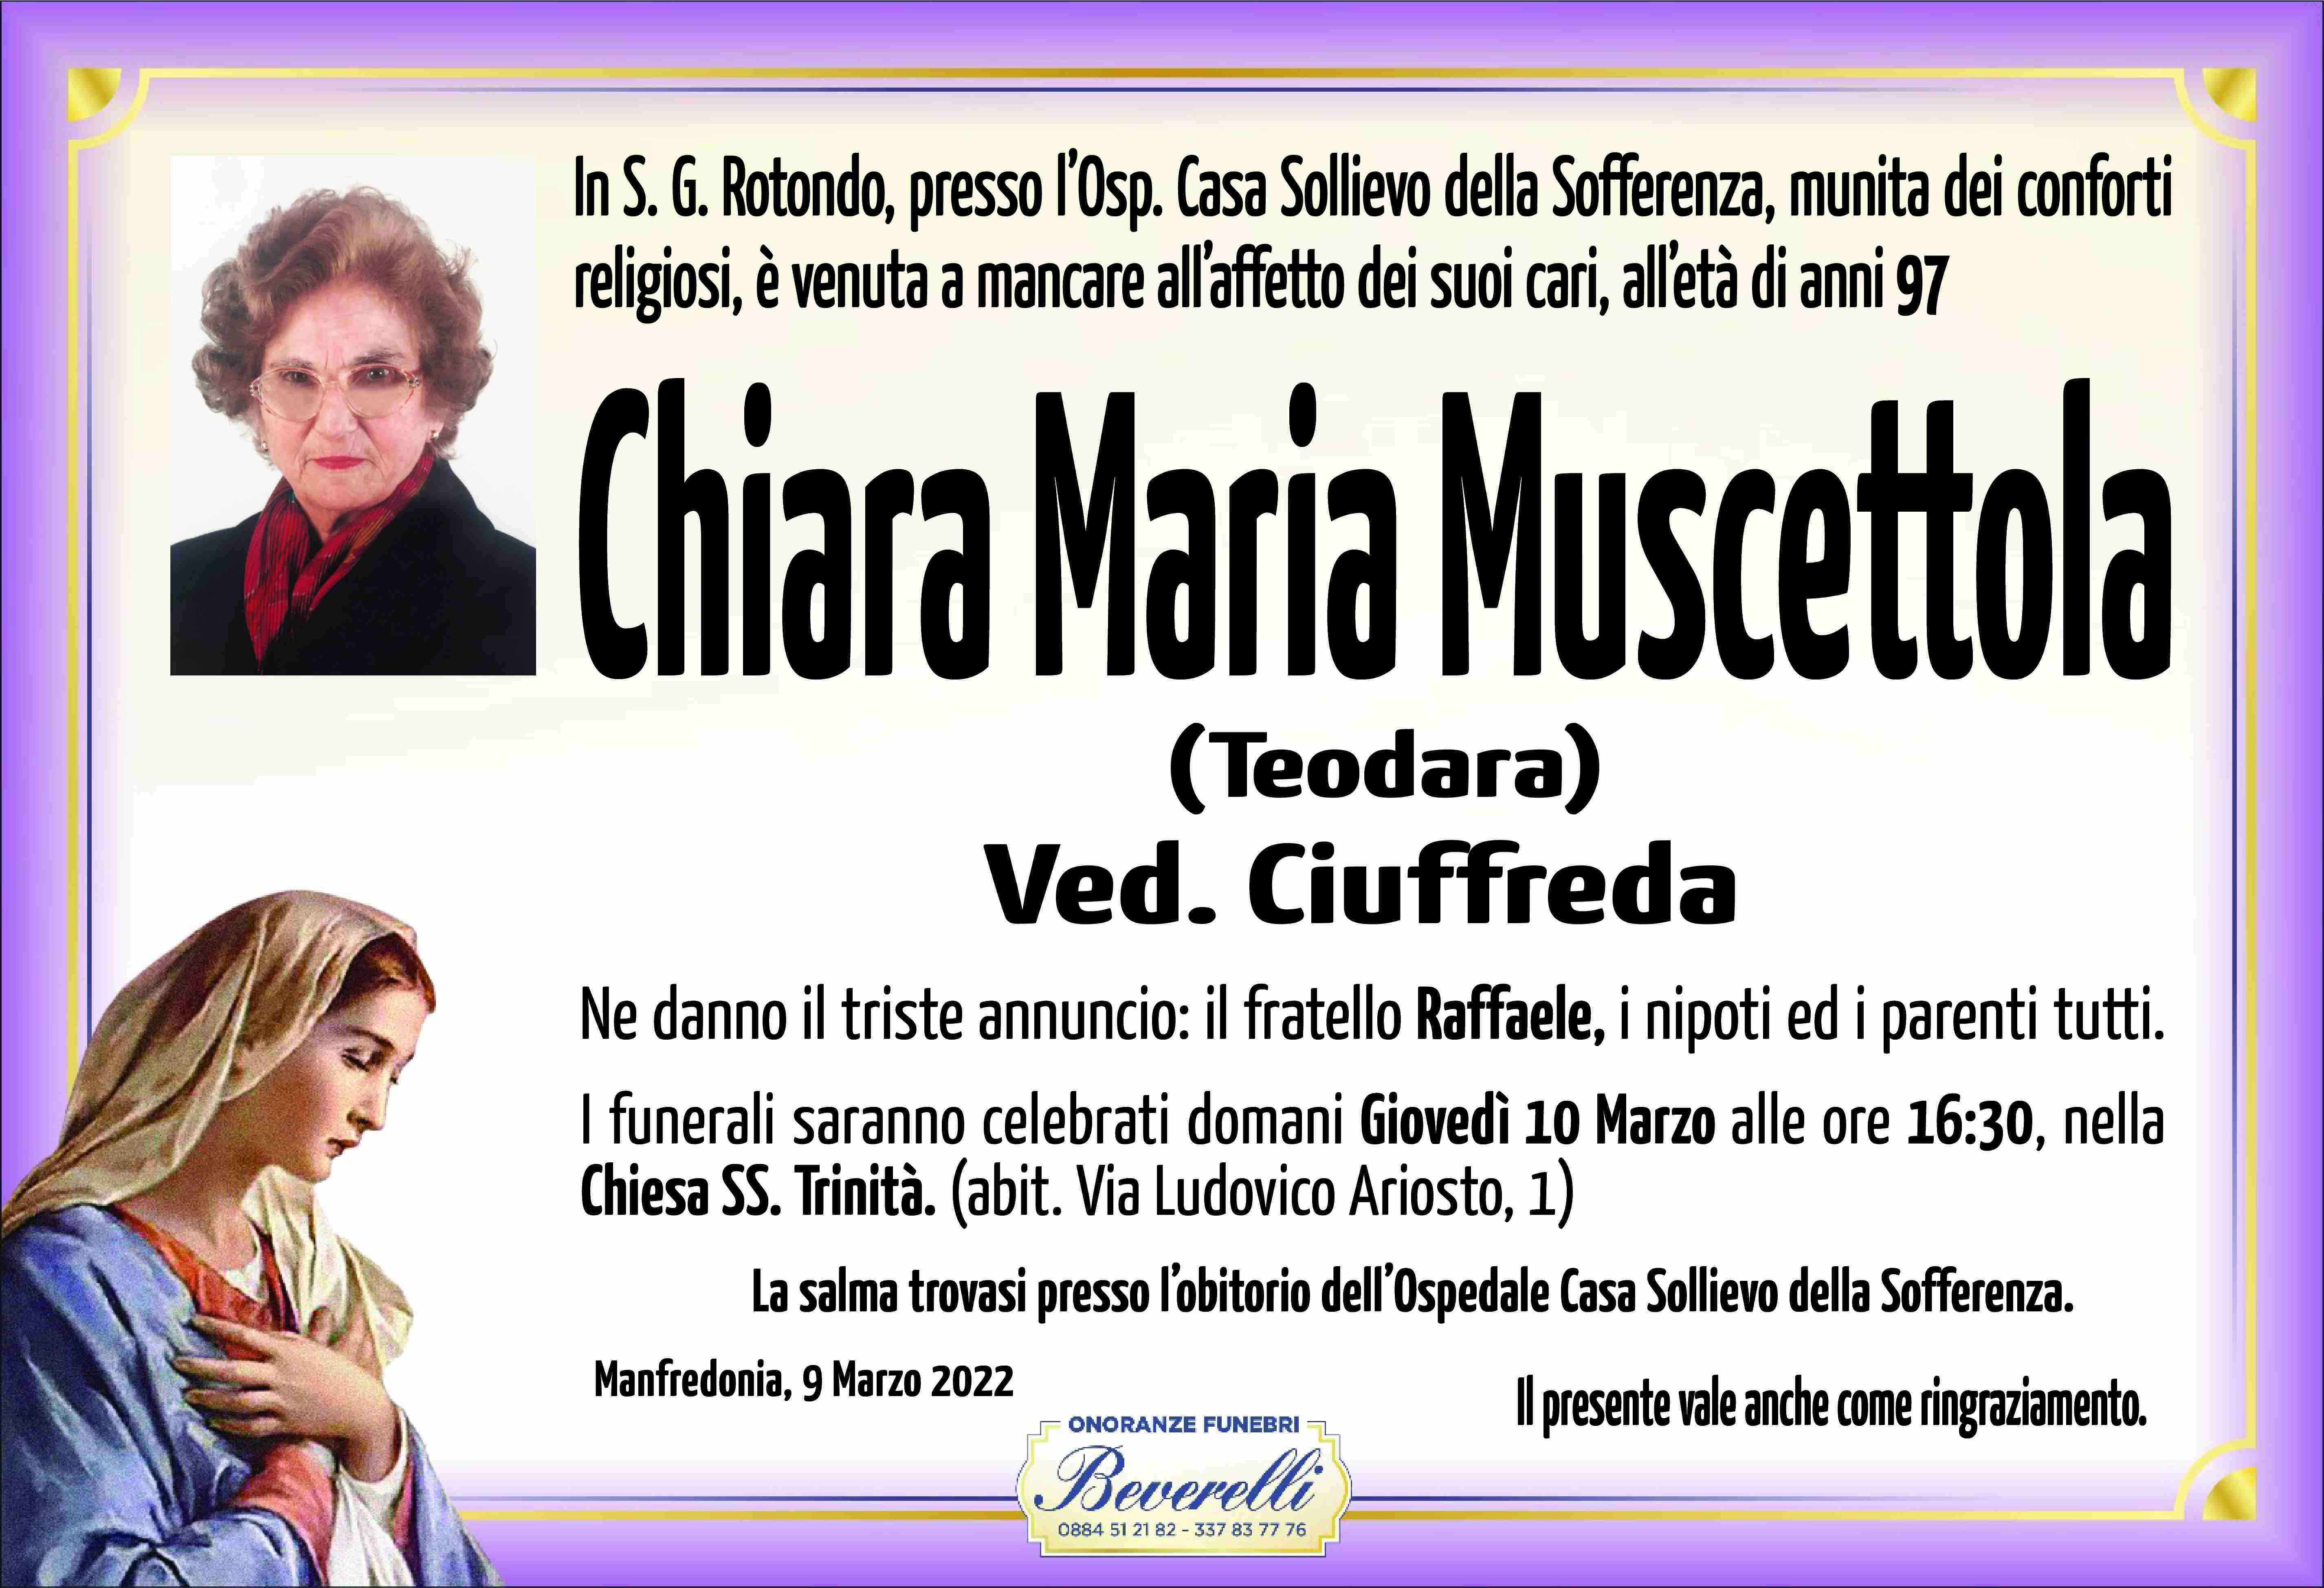 Chiara Maria Muscettola